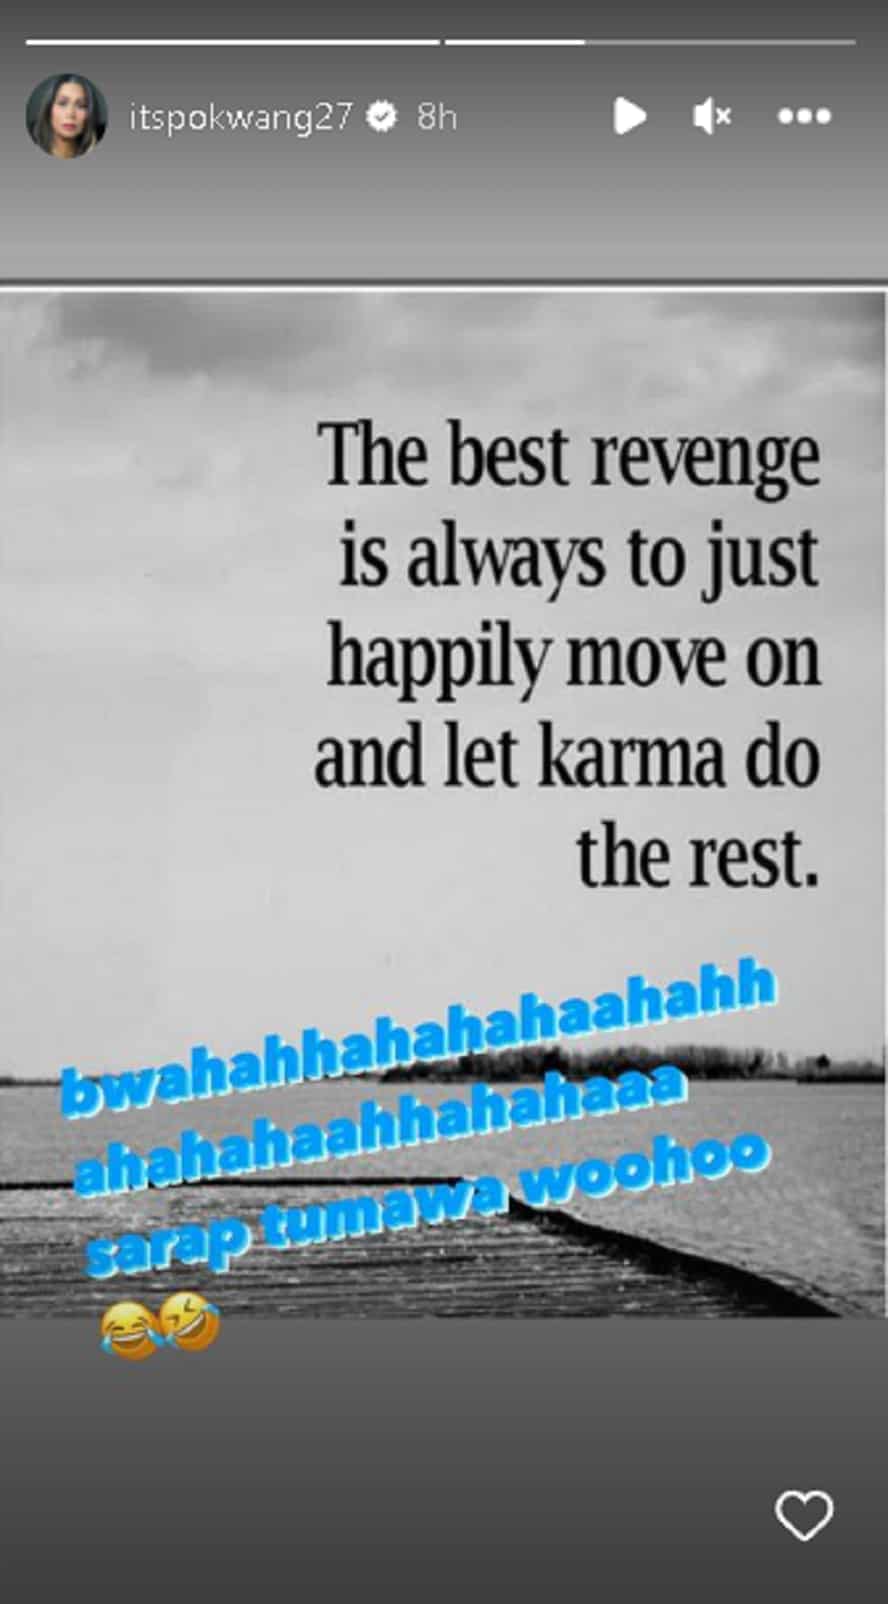 Pokwang, nagpost ng panibagong hugot sa socmed: “The best revenge… move on and let karma do the rest”